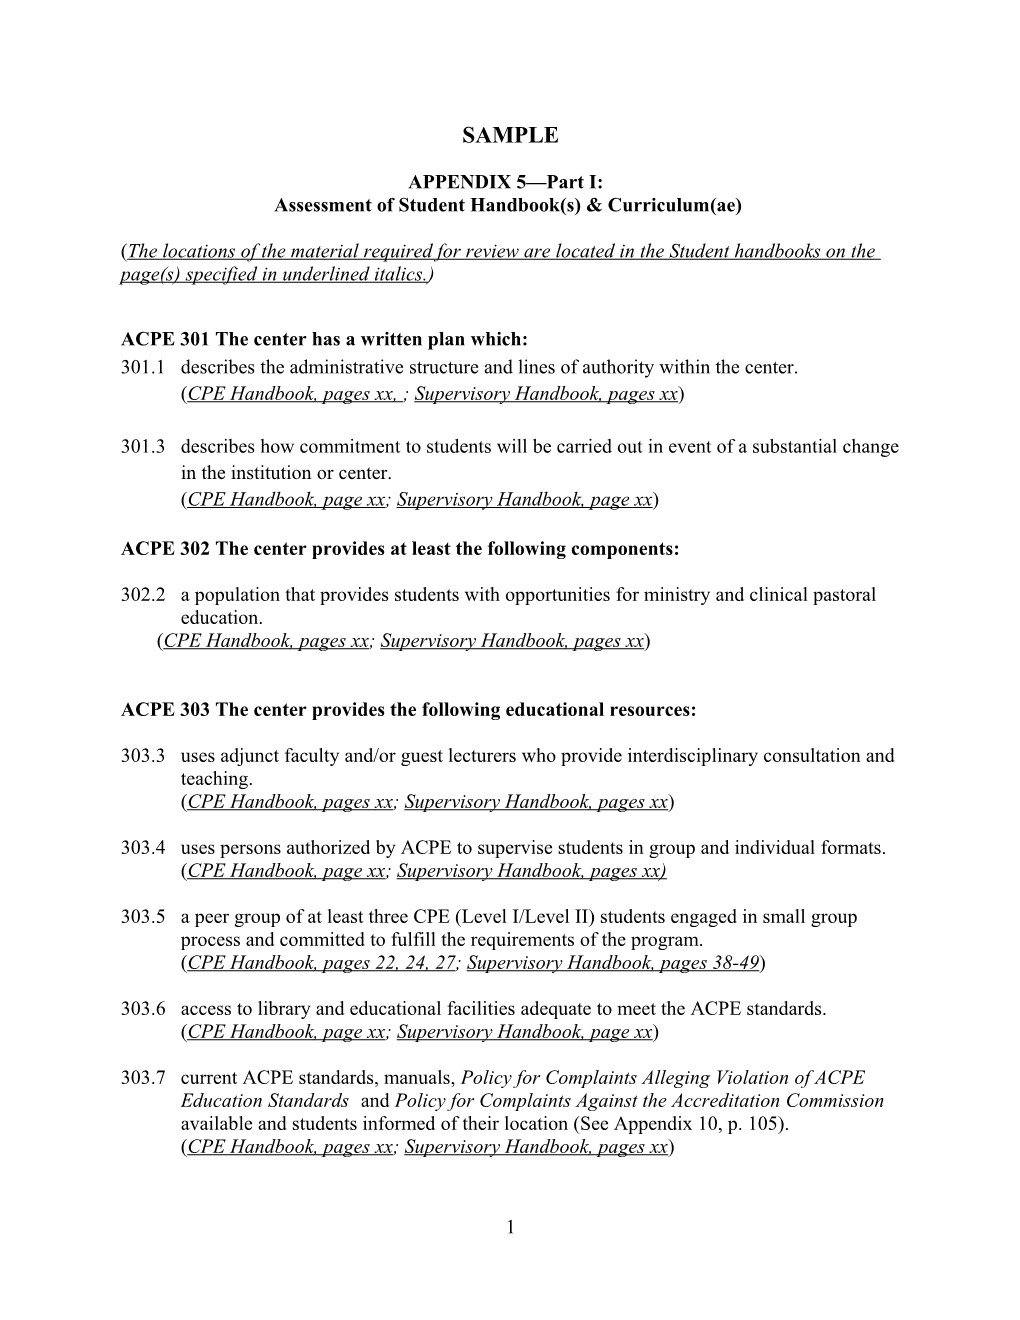 Assessment of Student Handbook(S) & Curriculum(Ae)